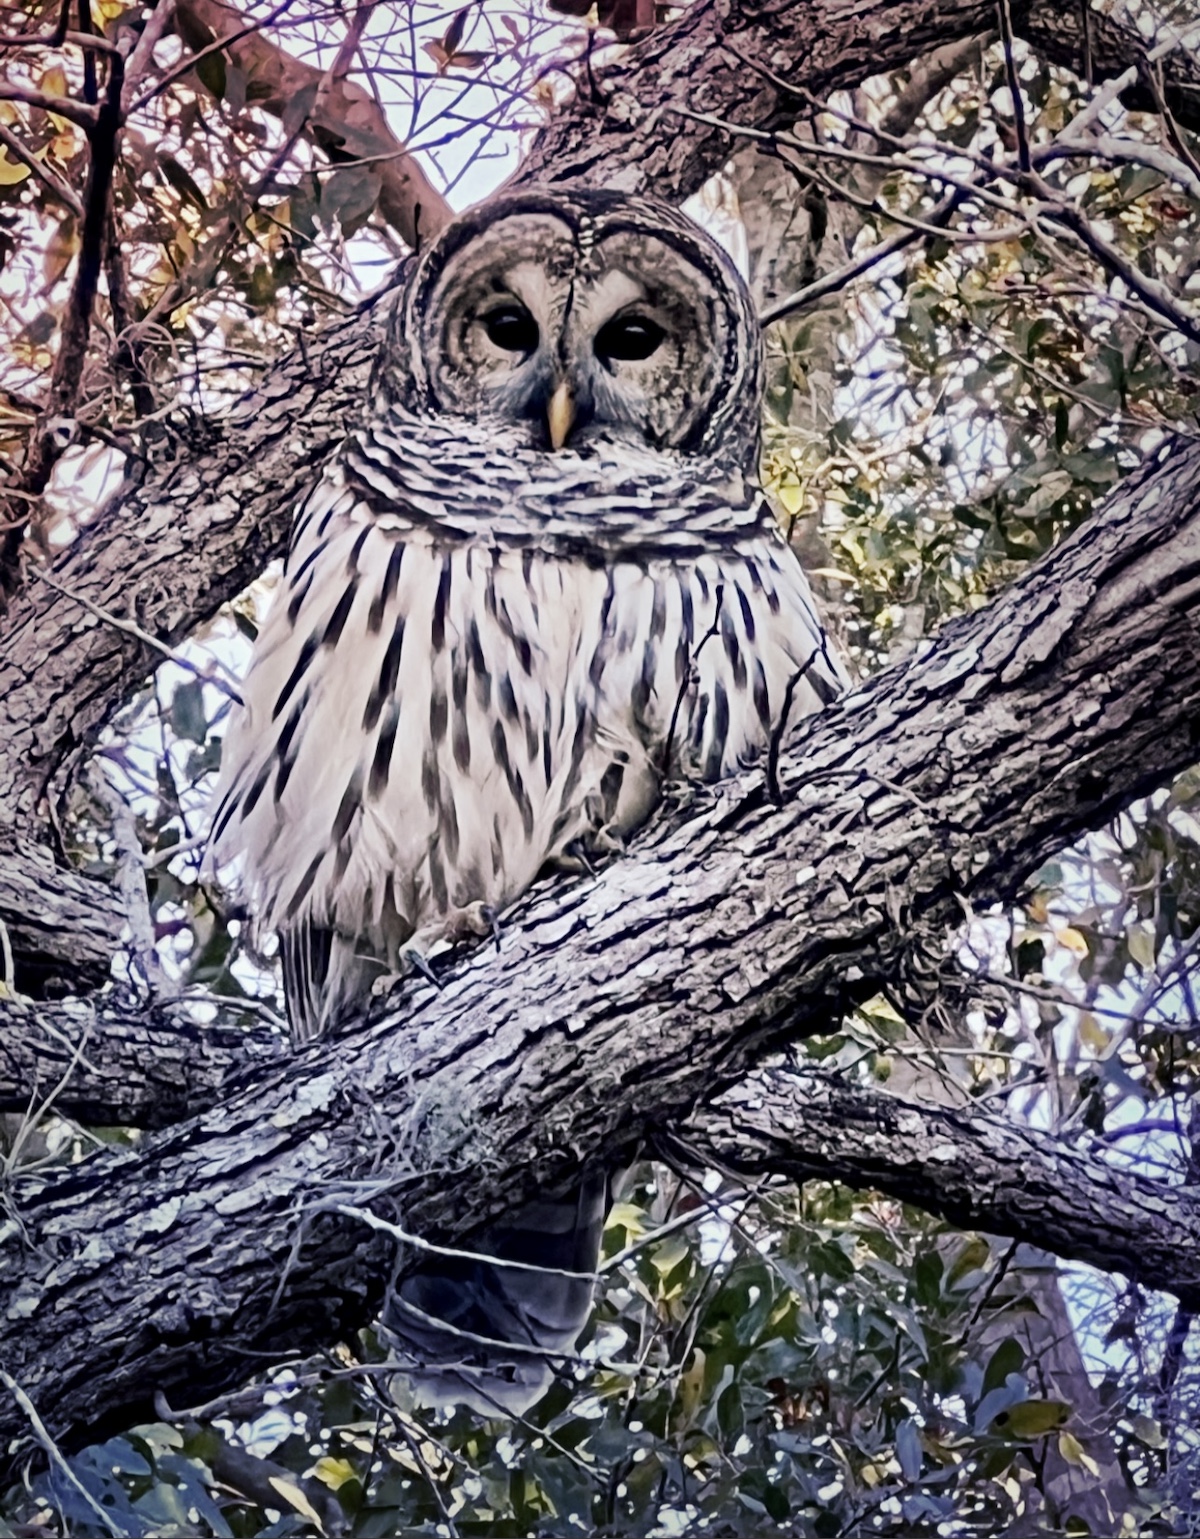 Barred owl at Baseline Trailhead Park